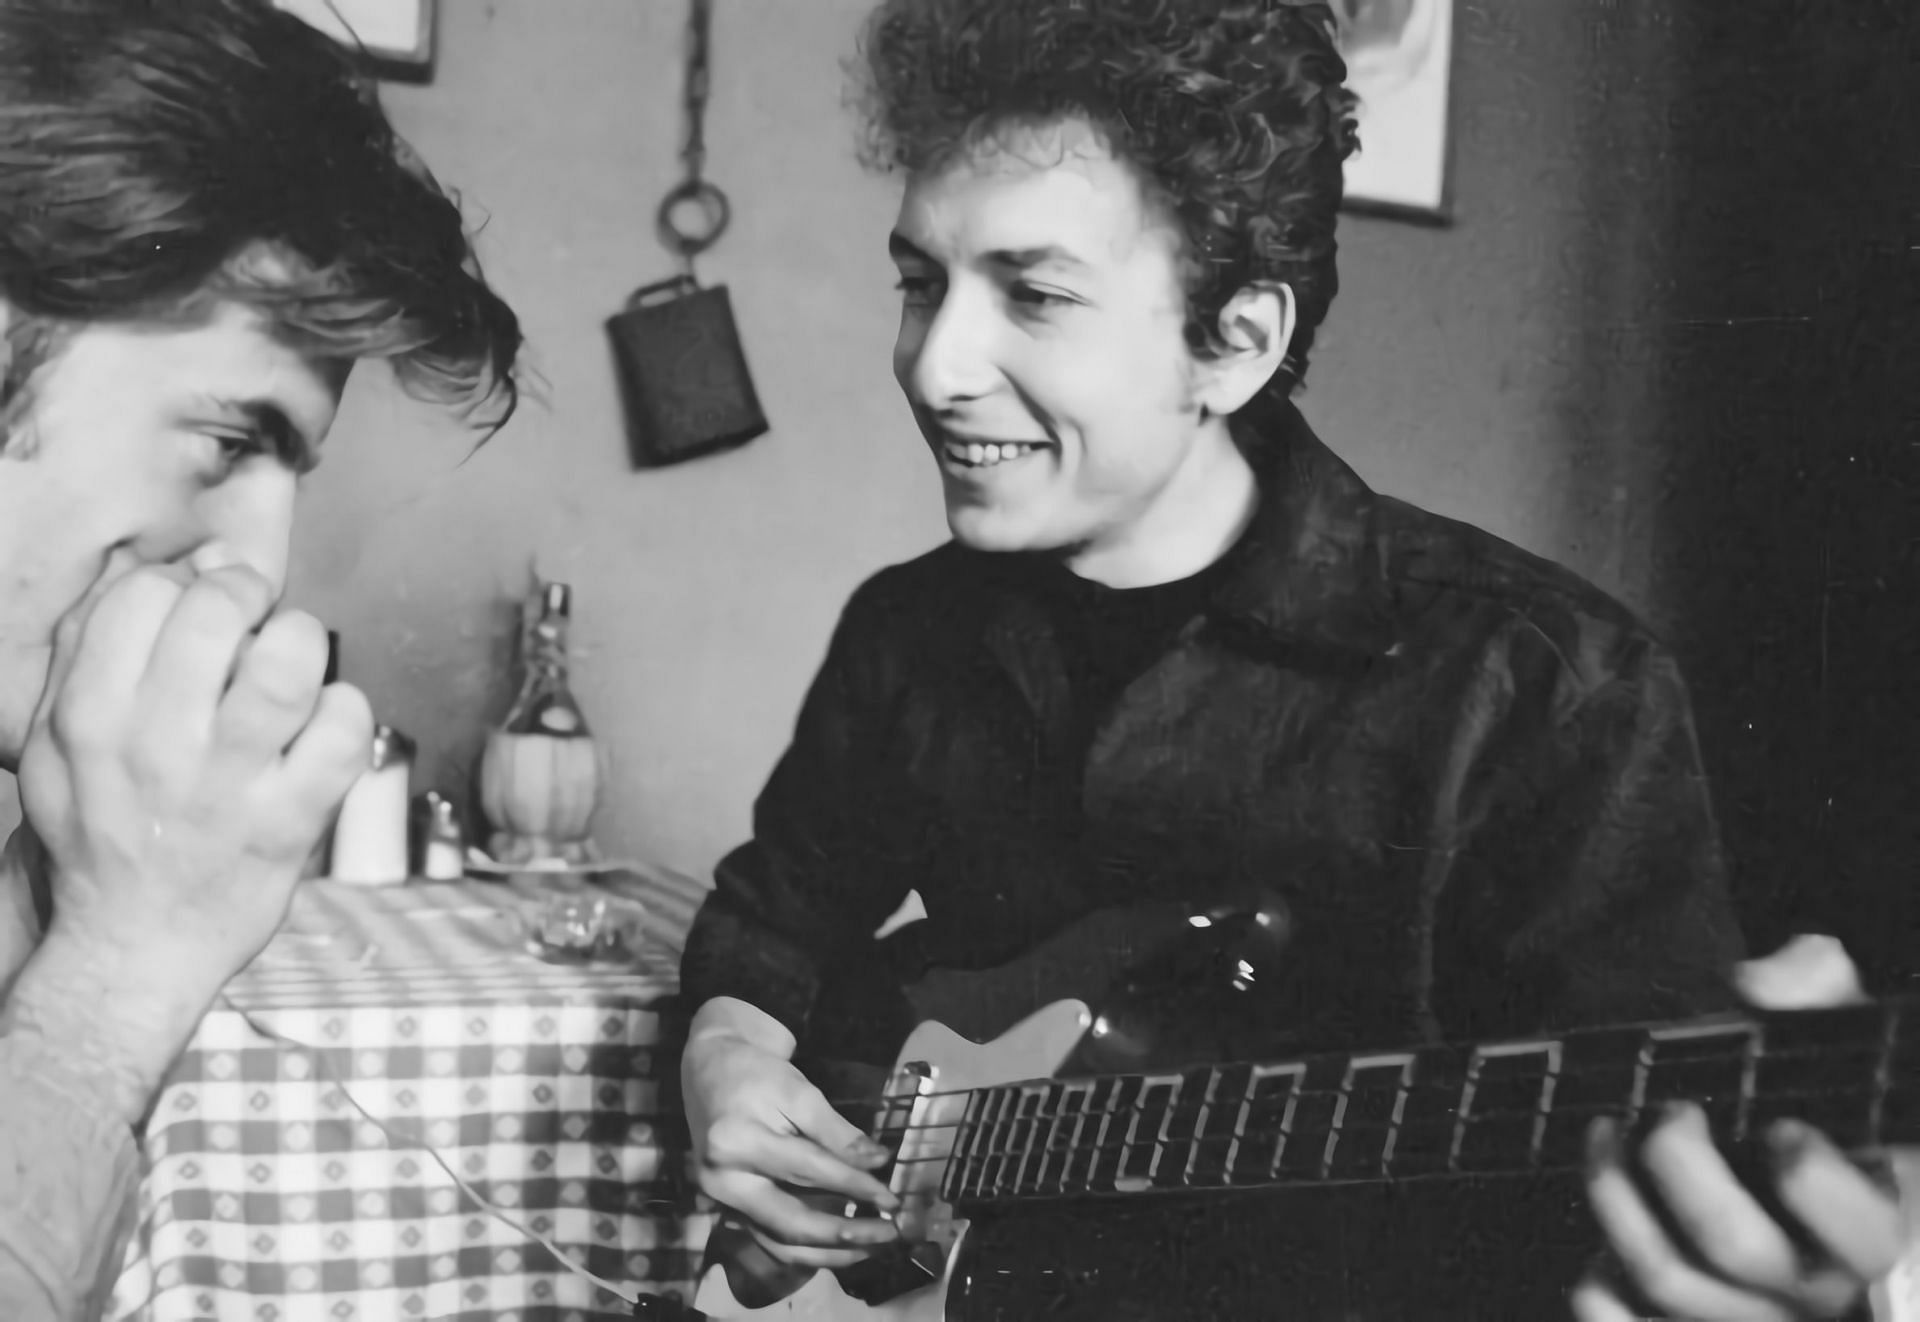 John Sebastian with Bob Dylan (Image via johnbsebastian.com)